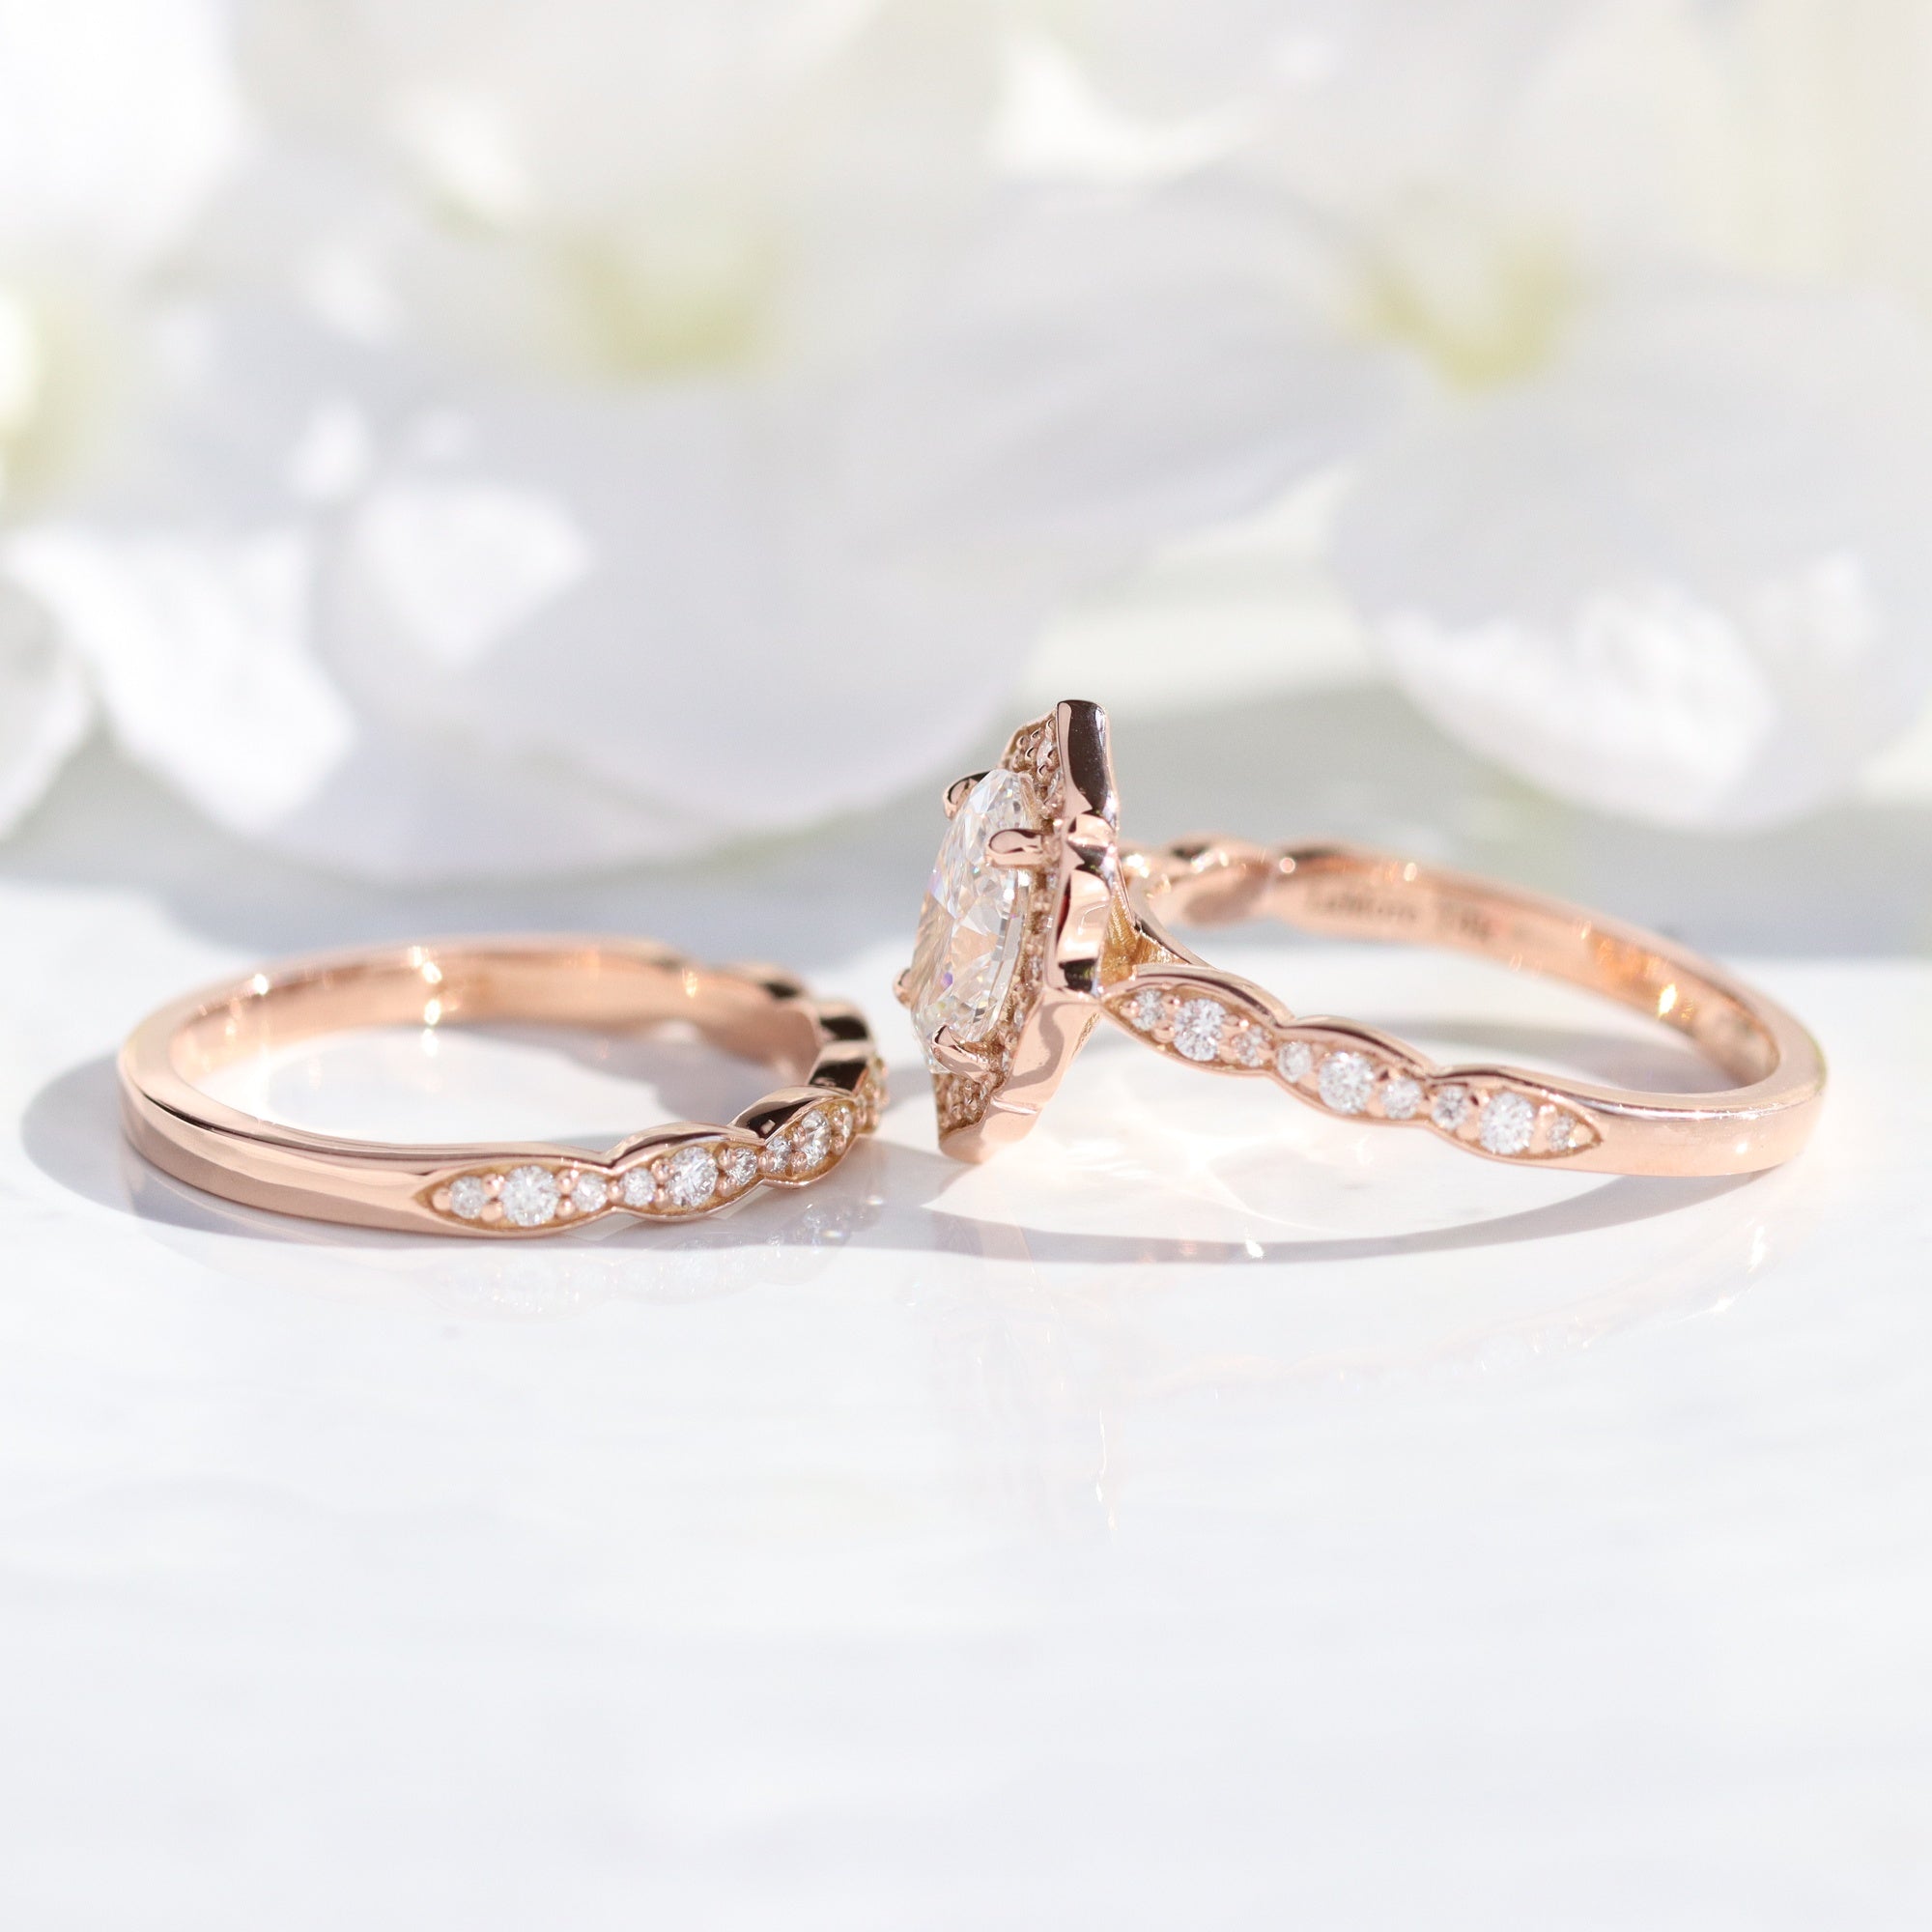 lab diamond ring stack rose gold vintage halo oval diamond engagement ring set La More Design Jewelry